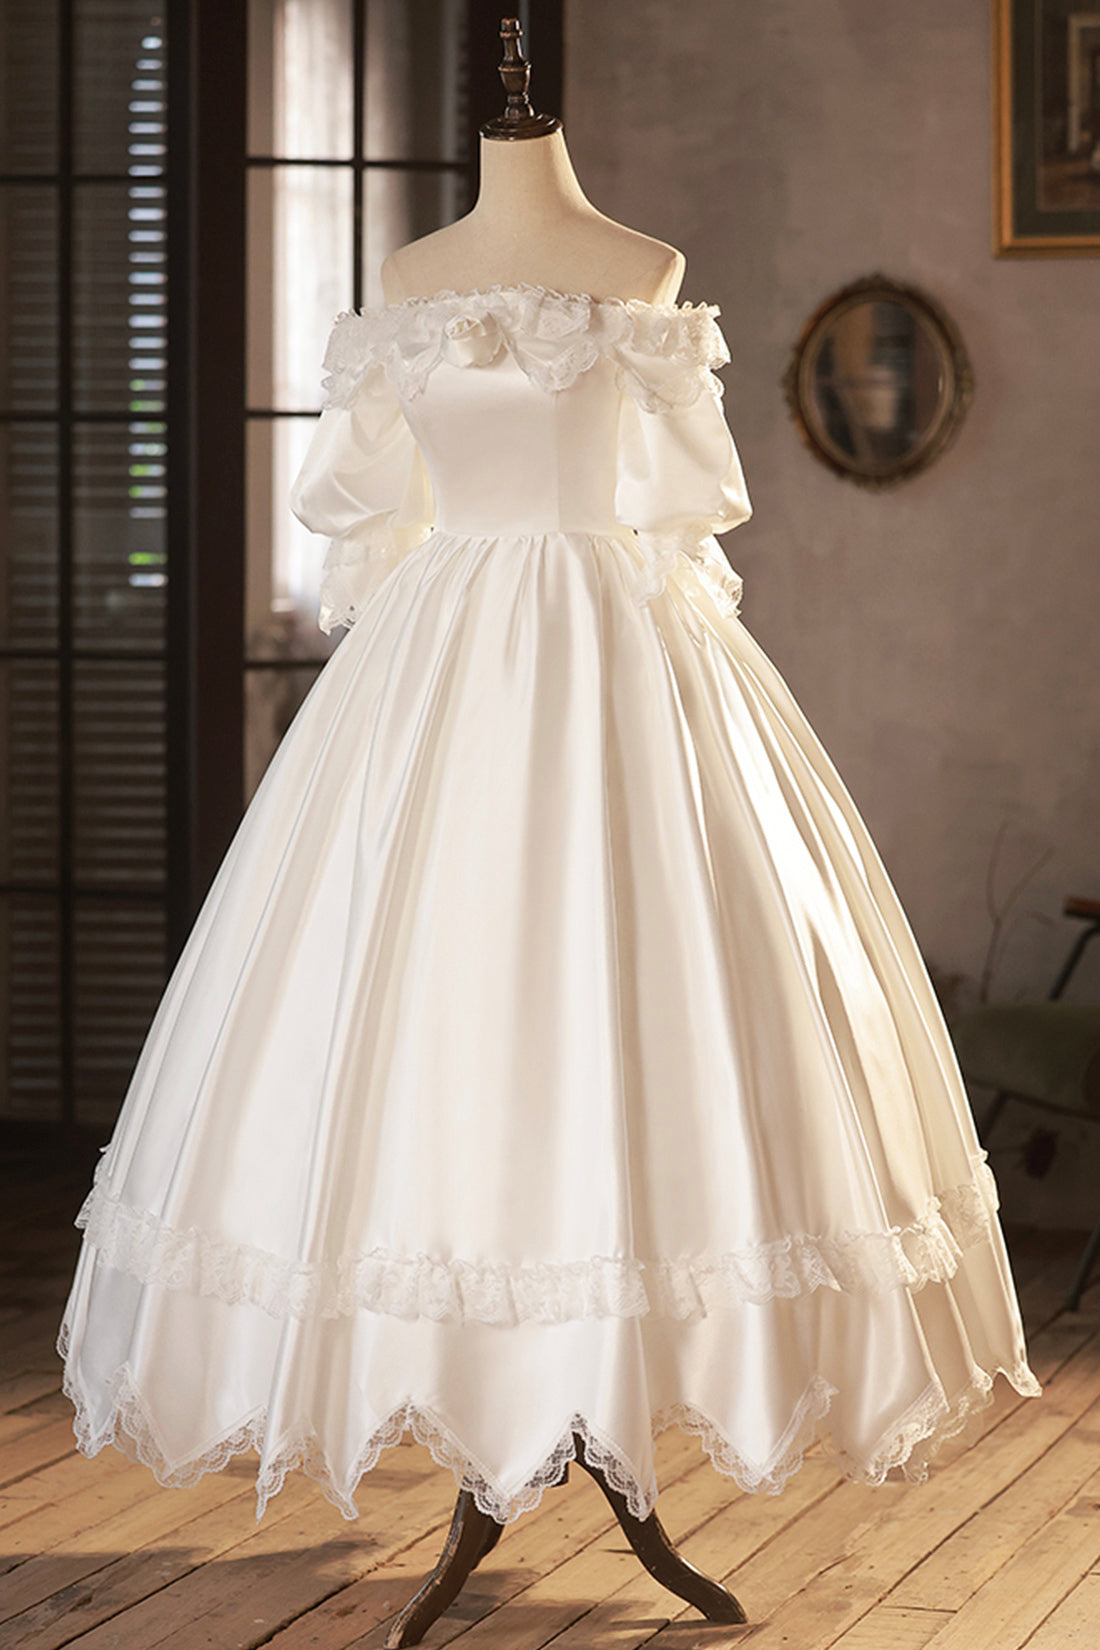 Details more than 143 white formal dresses super hot